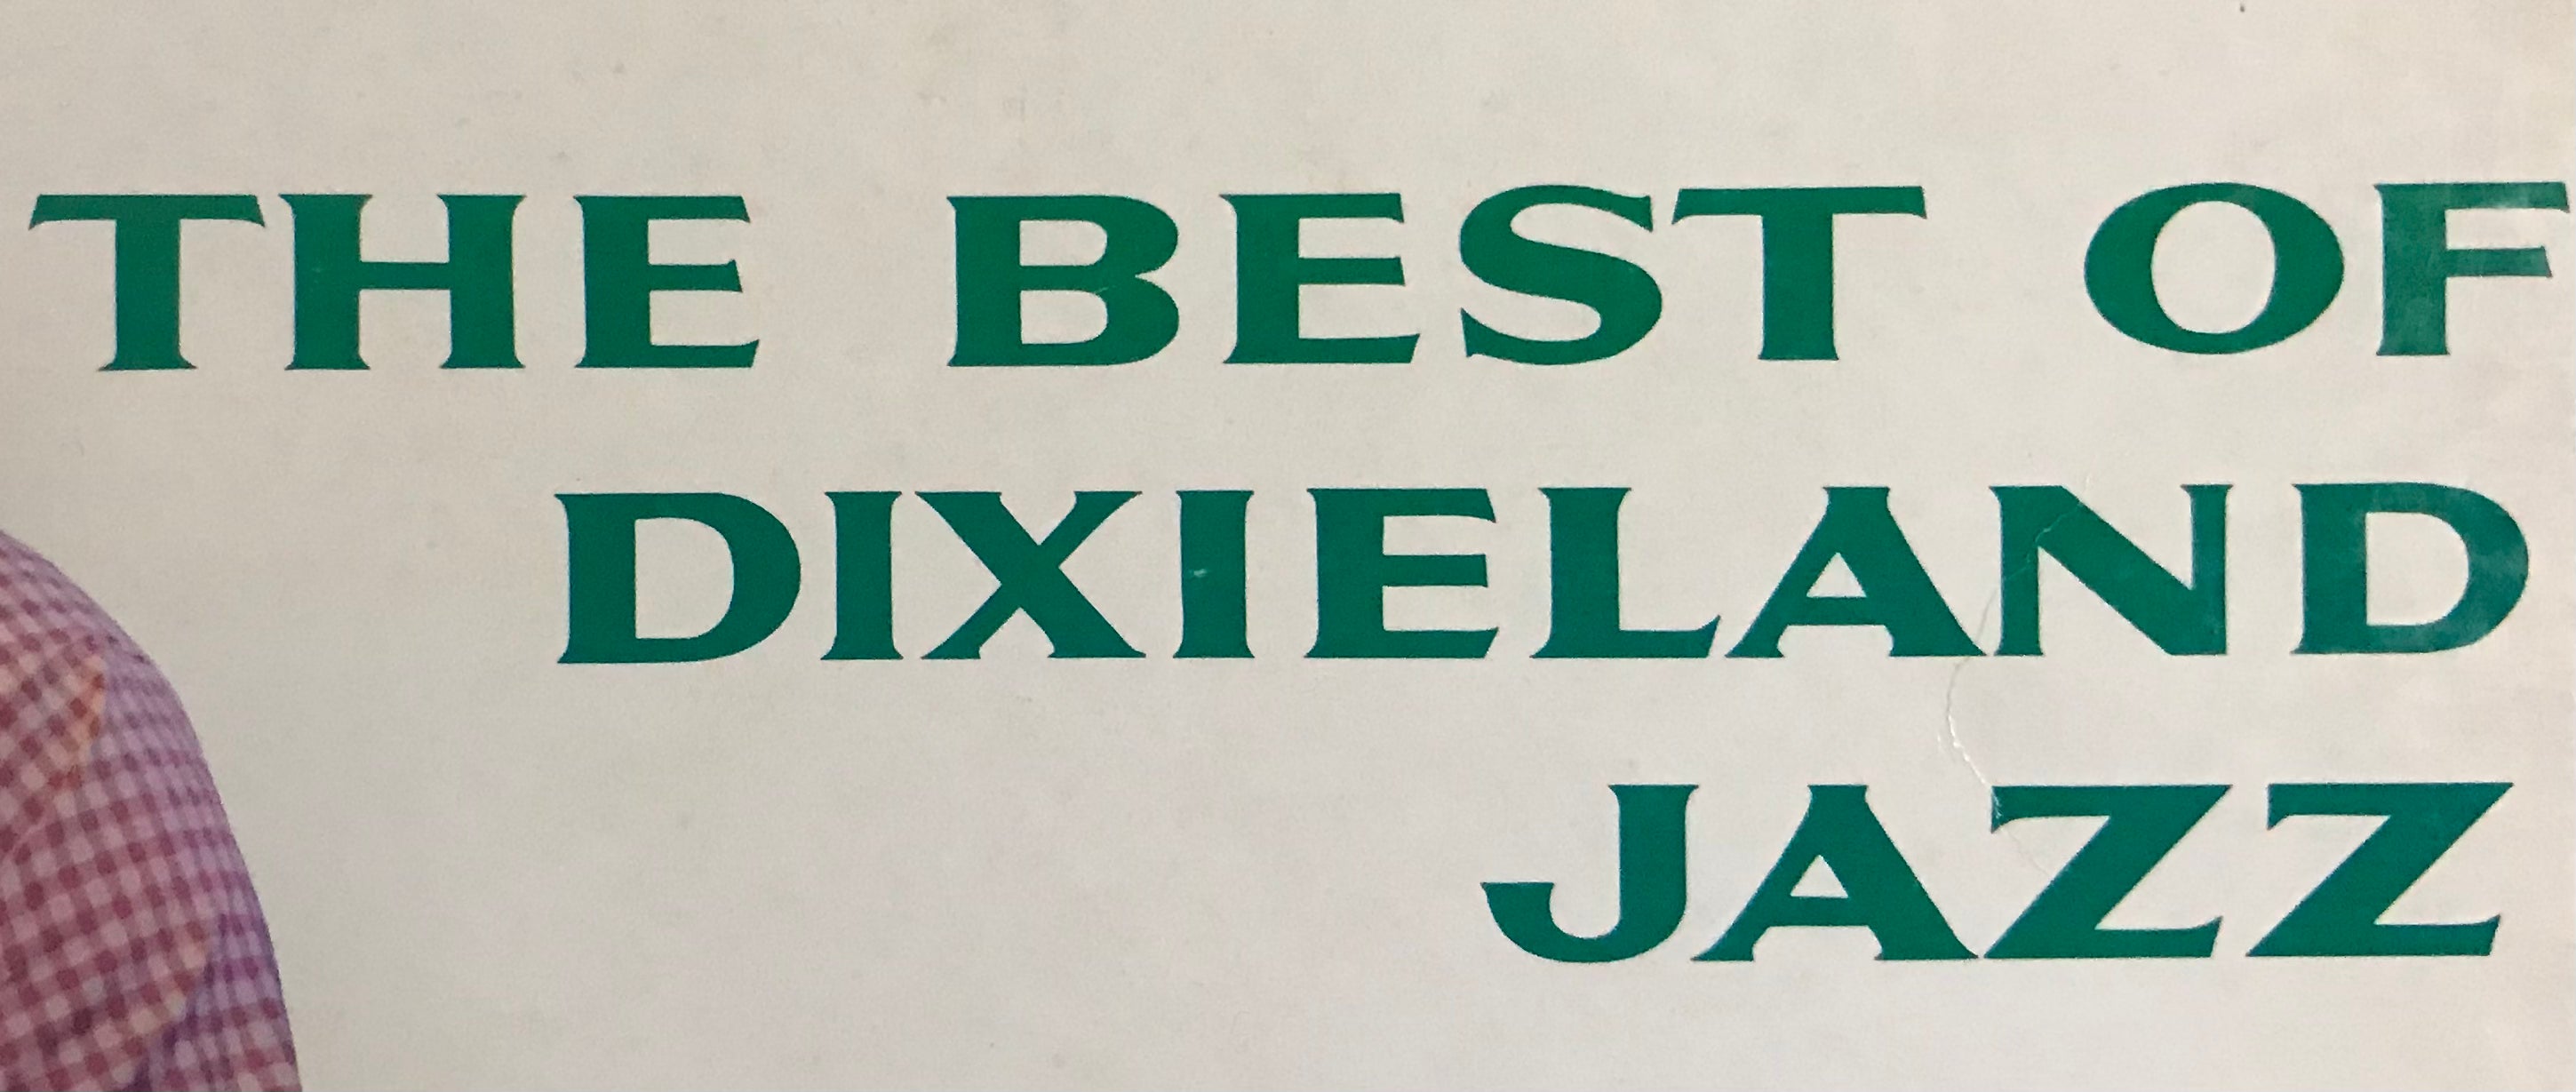 Al Hirt Best Of Dixieland Jazz Album Cover Notebook